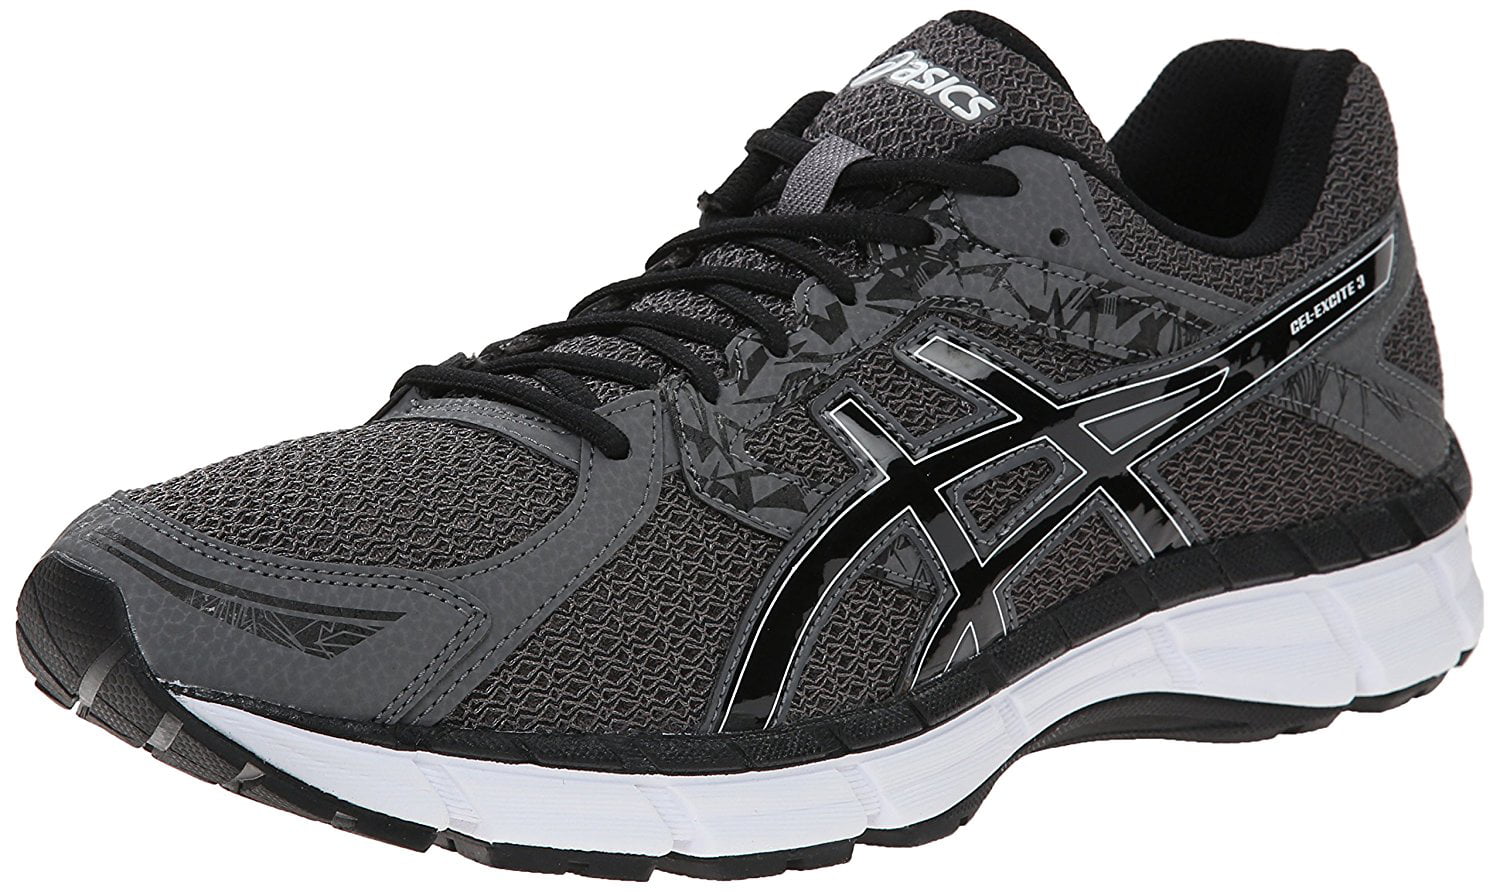 ASICS - ASICS Men's GEL-Excite 3 Athletic Running Shoes Carbon/Black ...